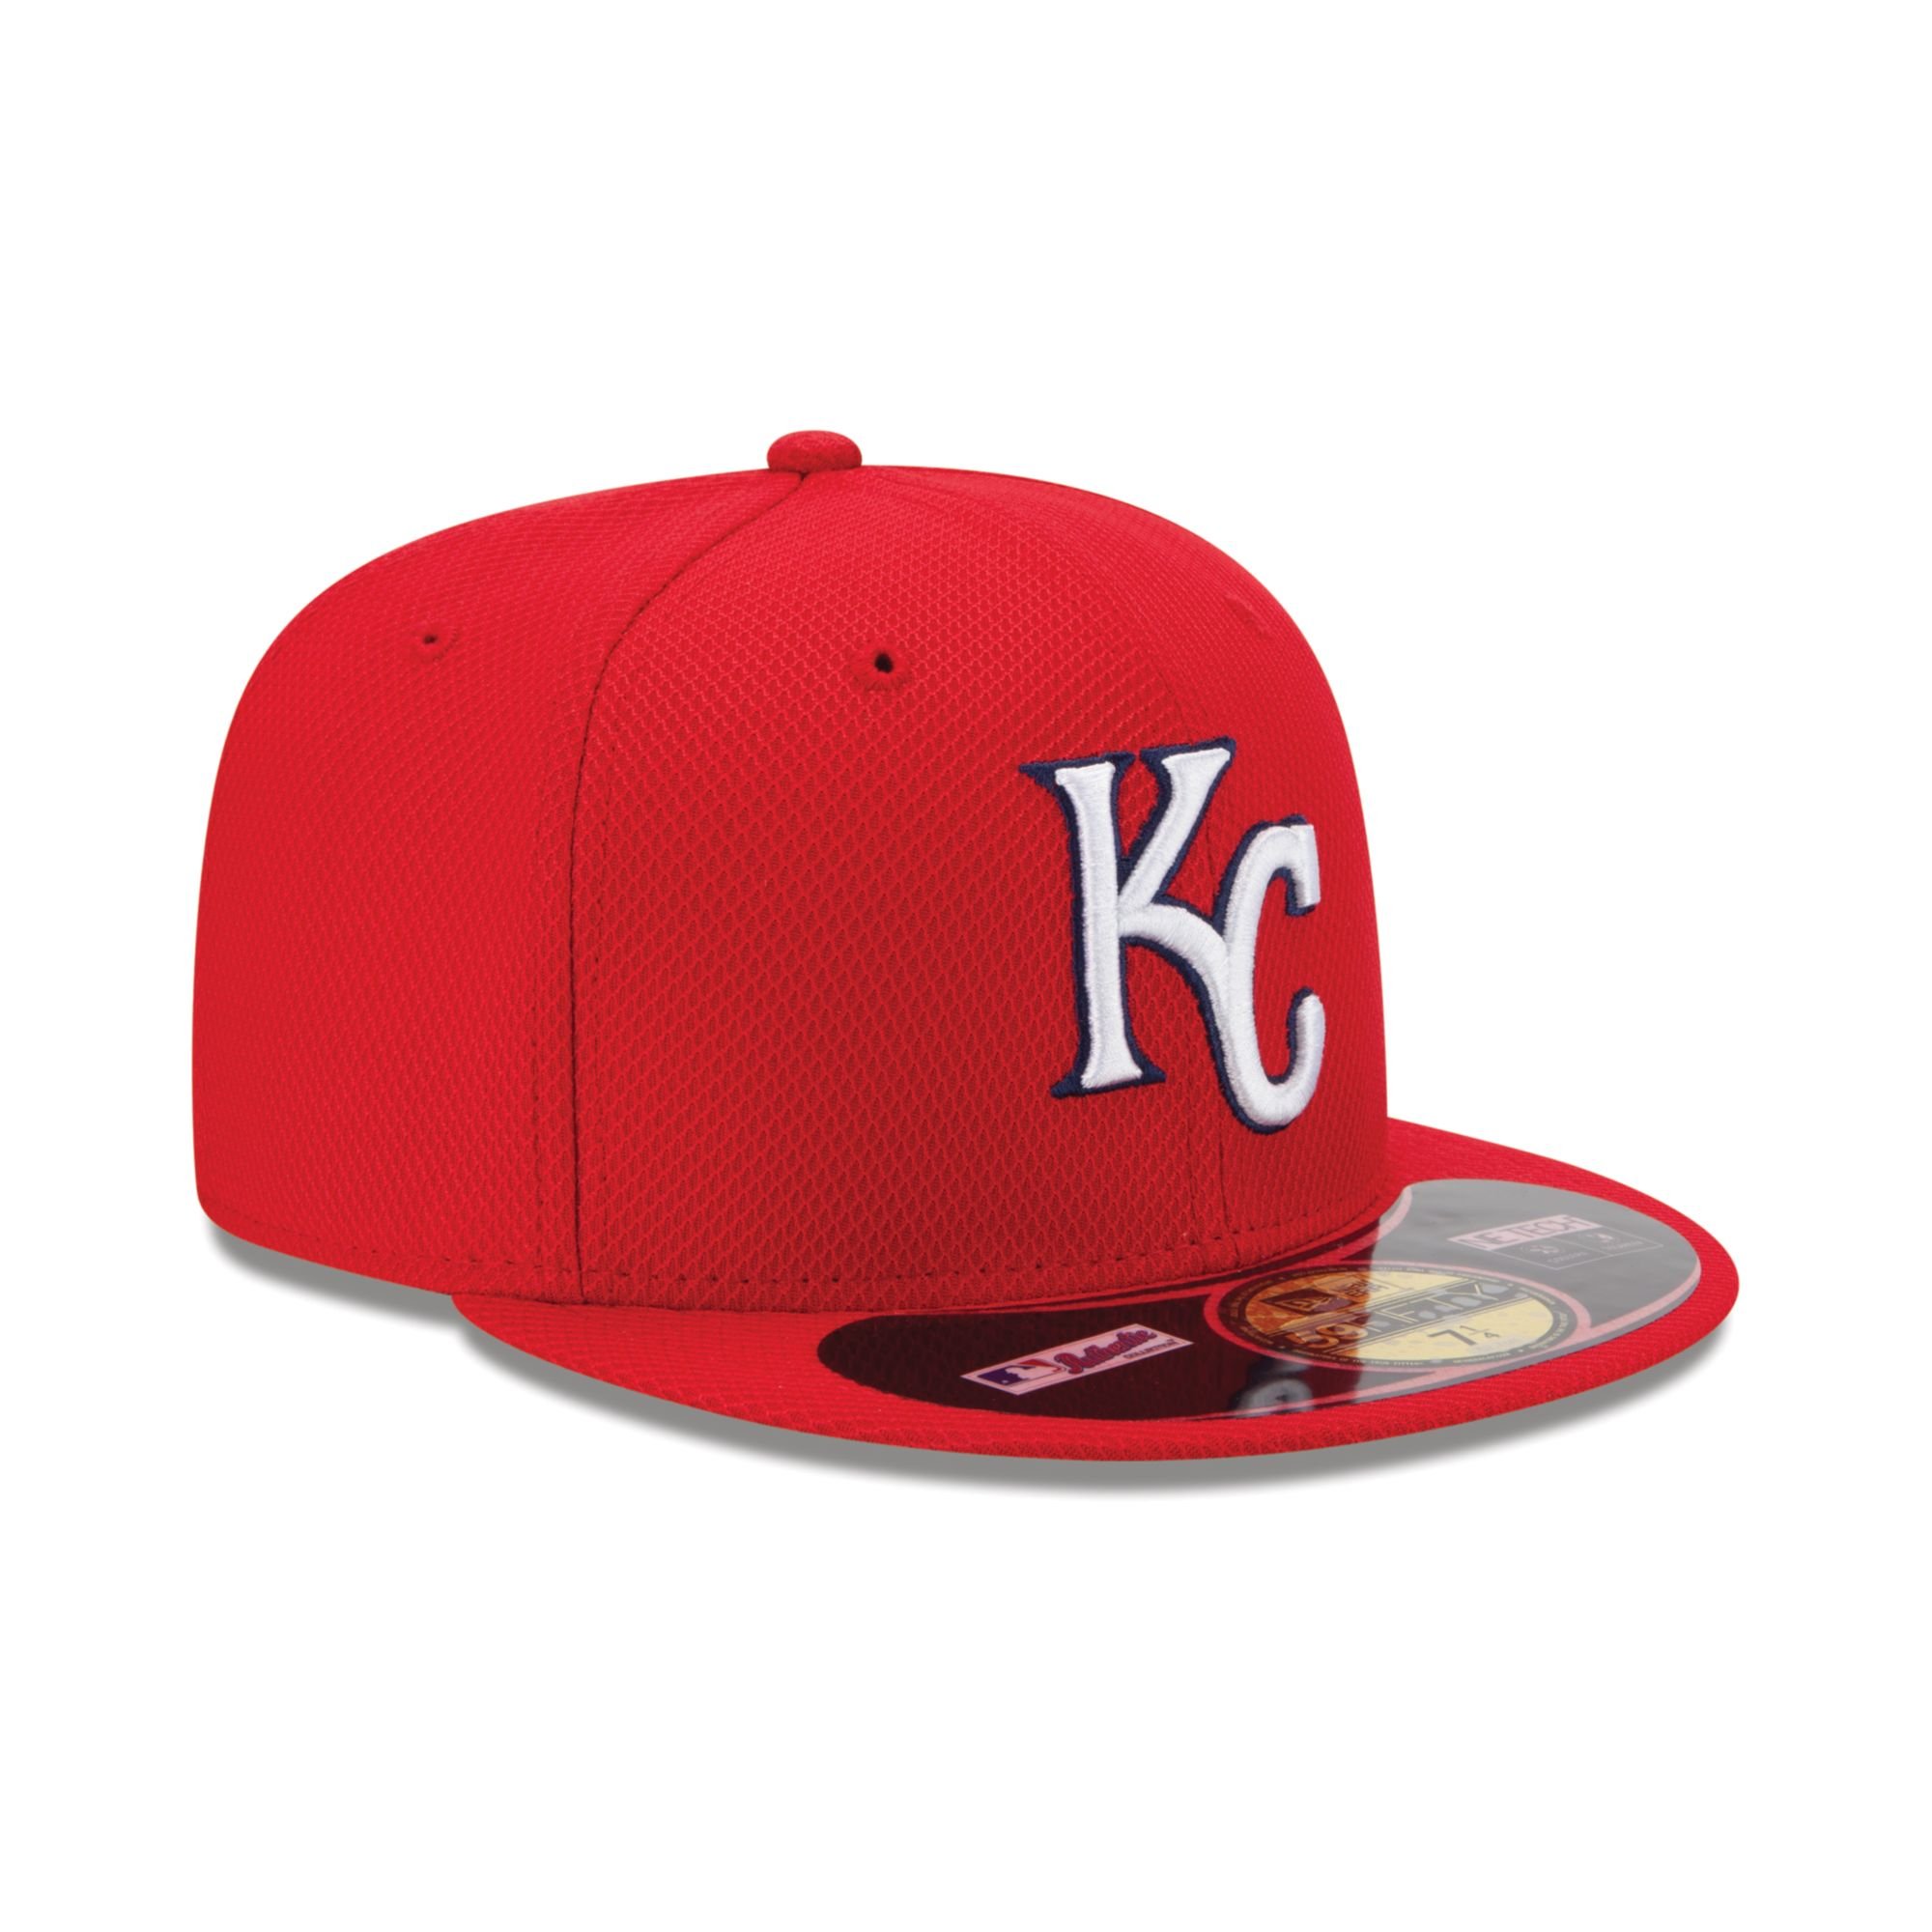 KTZ Kansas City Royals Home Run Derby 59fifty Cap in Red for Men